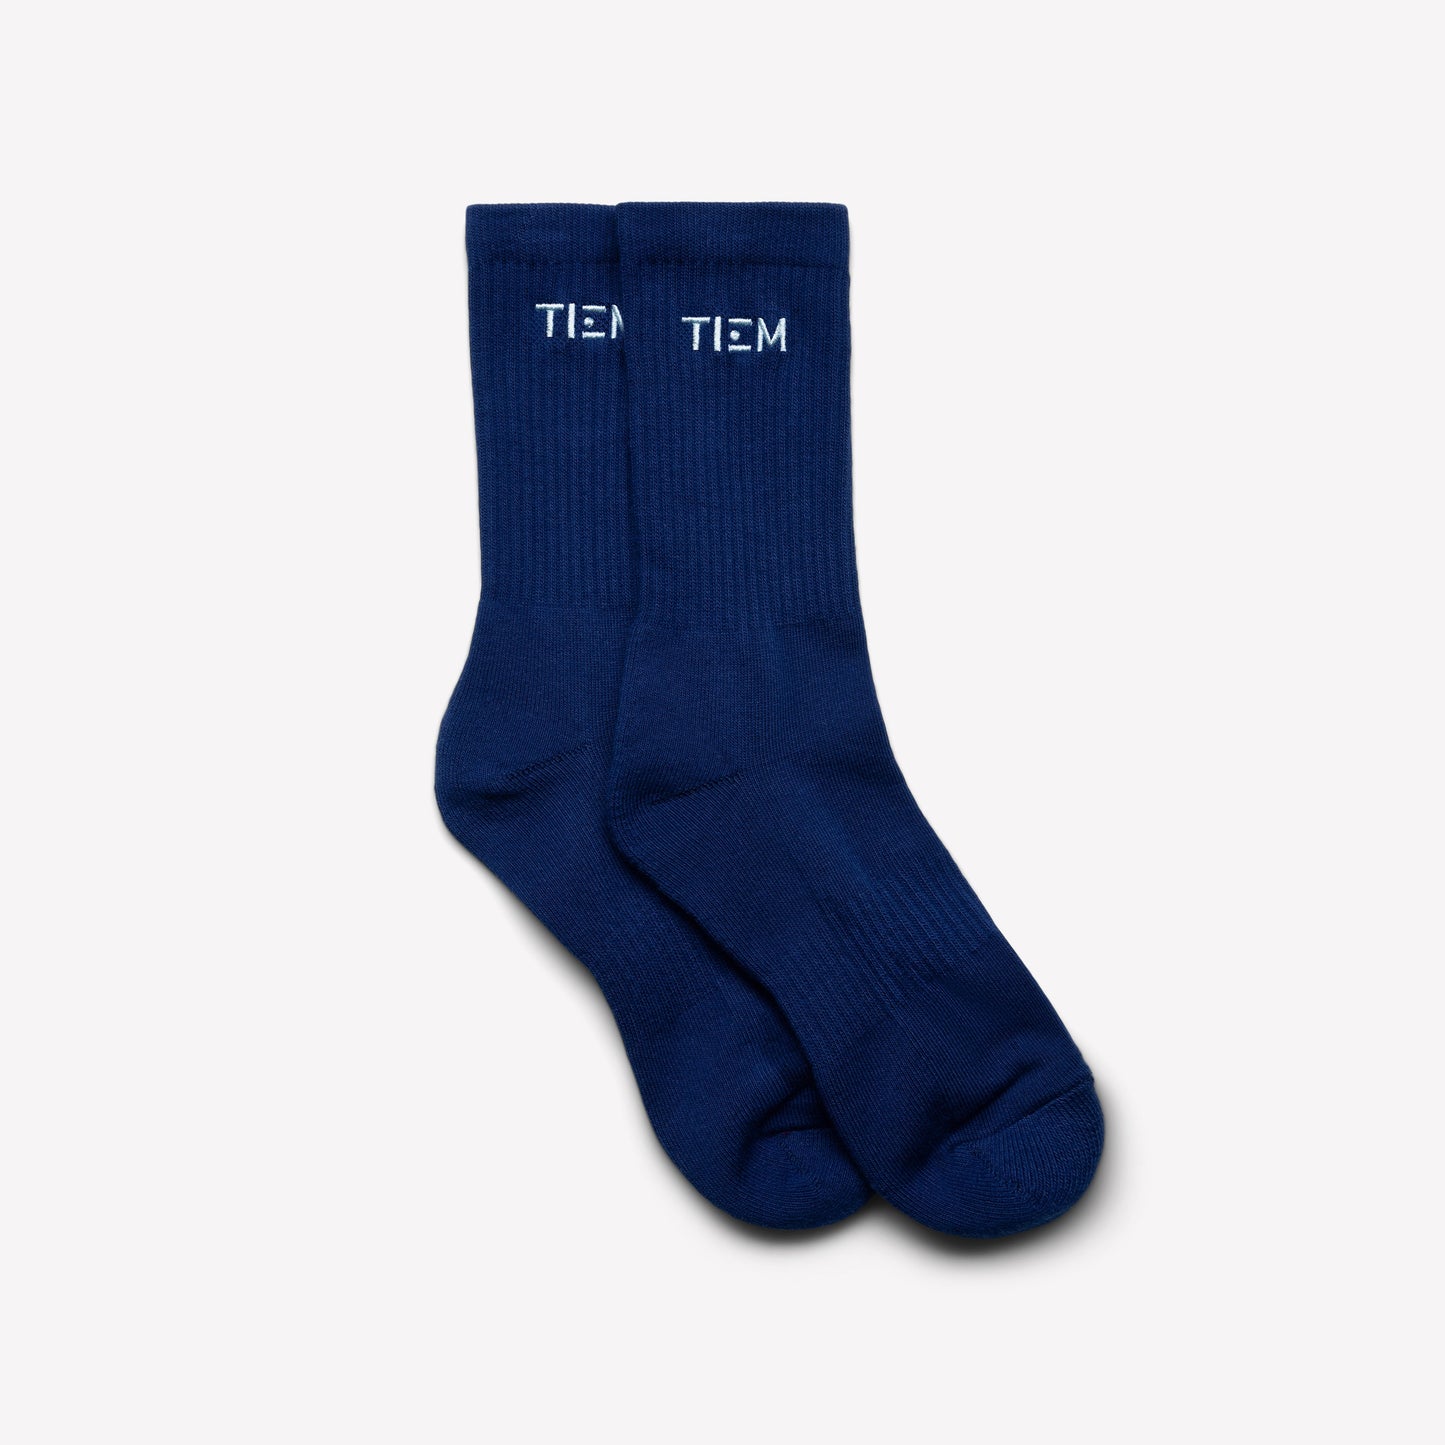 Cotton Crew Socks - Navy/Blue